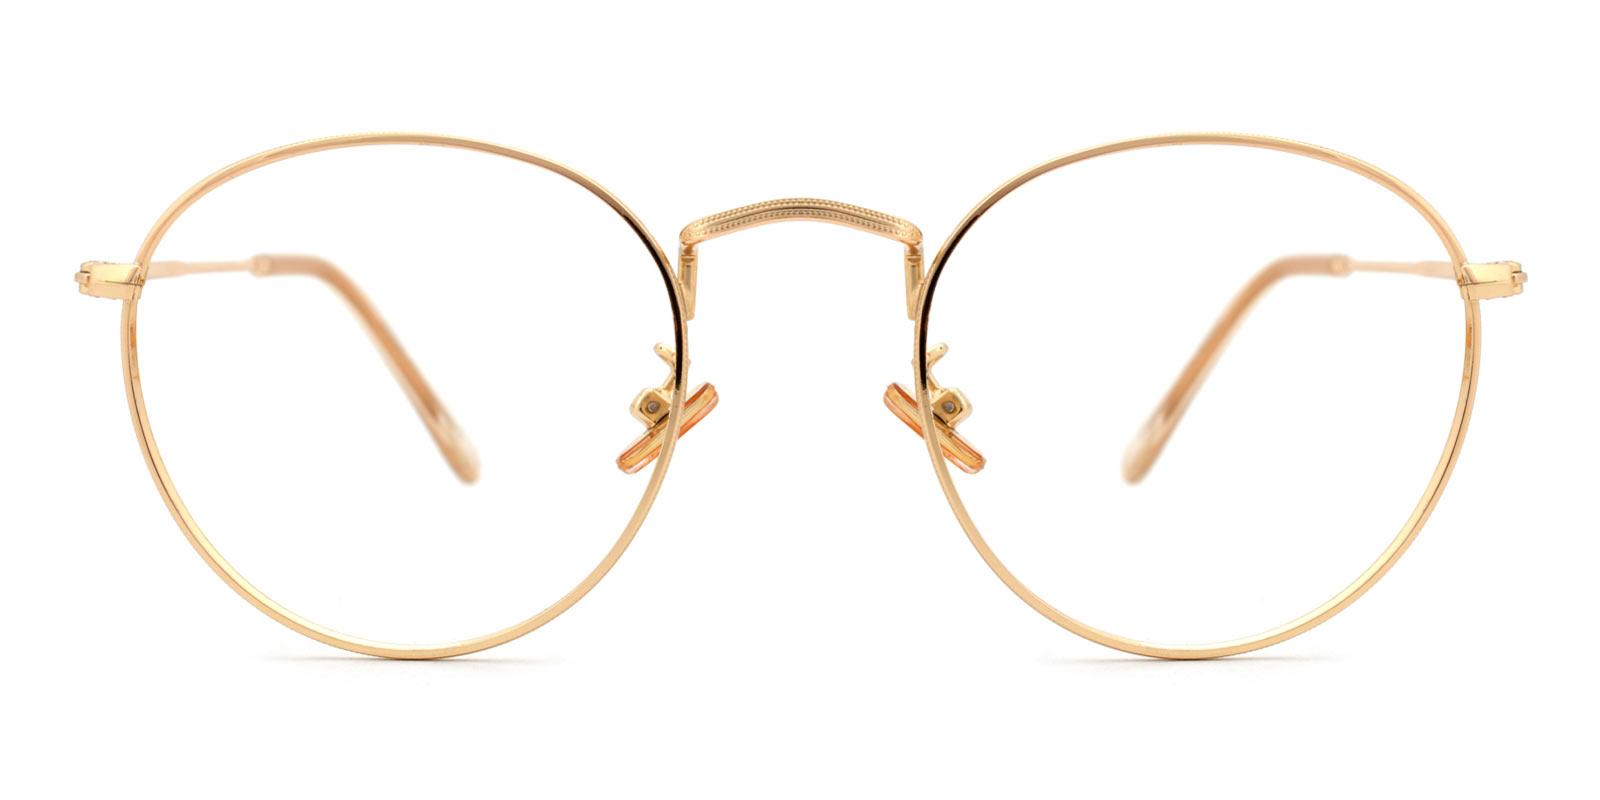 Canary-Translucent-Round-Metal-Eyeglasses-detail